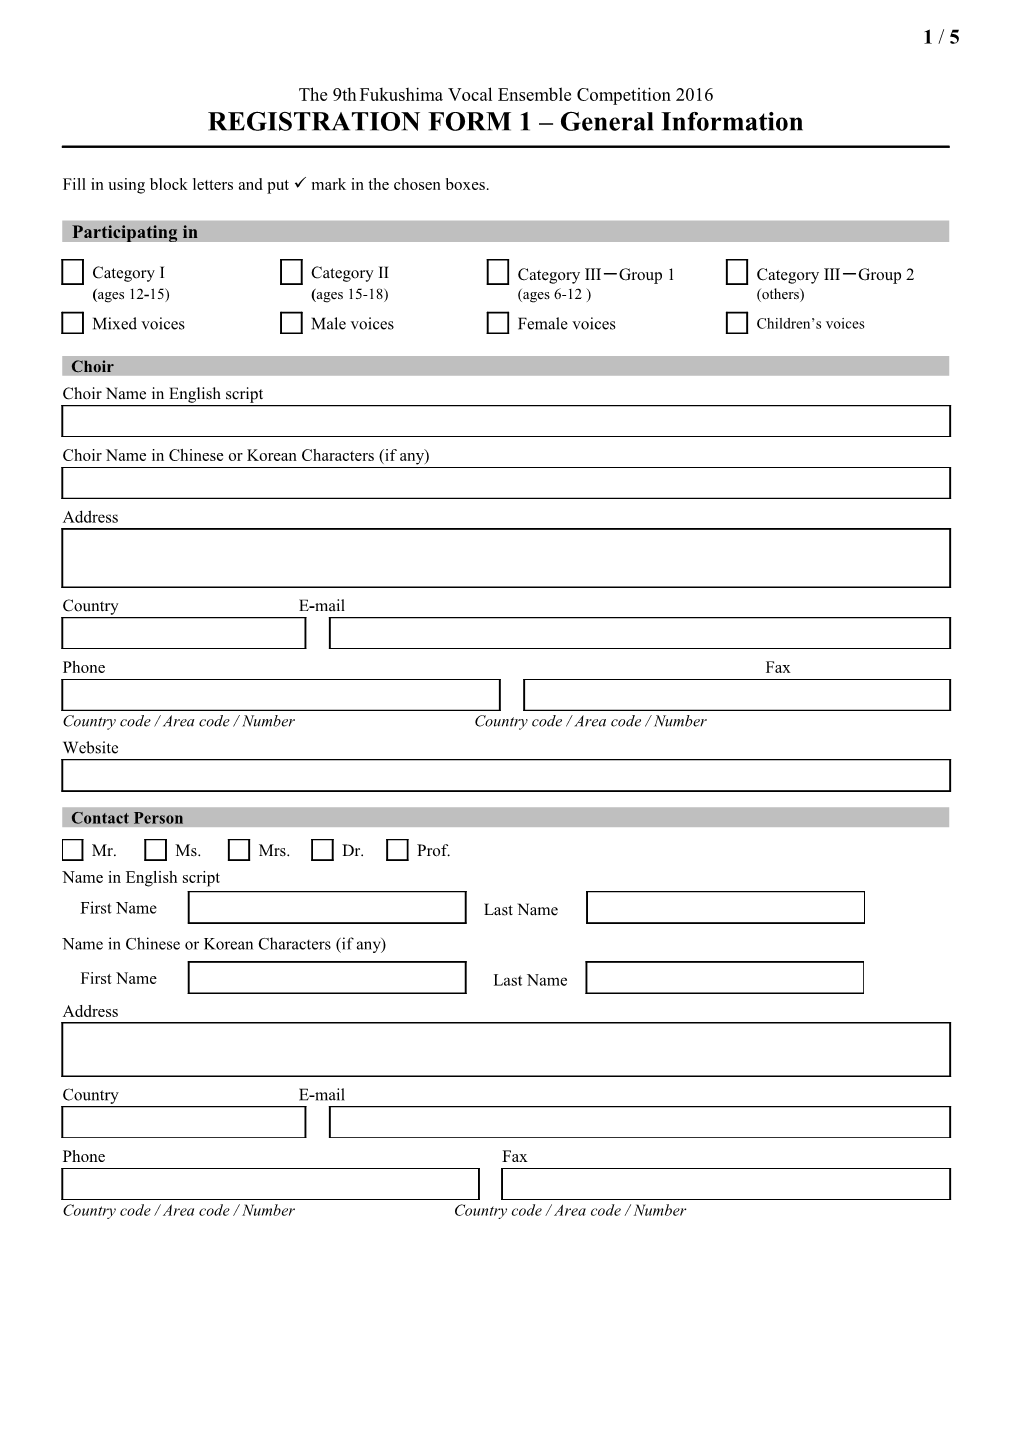 Application Form IICC